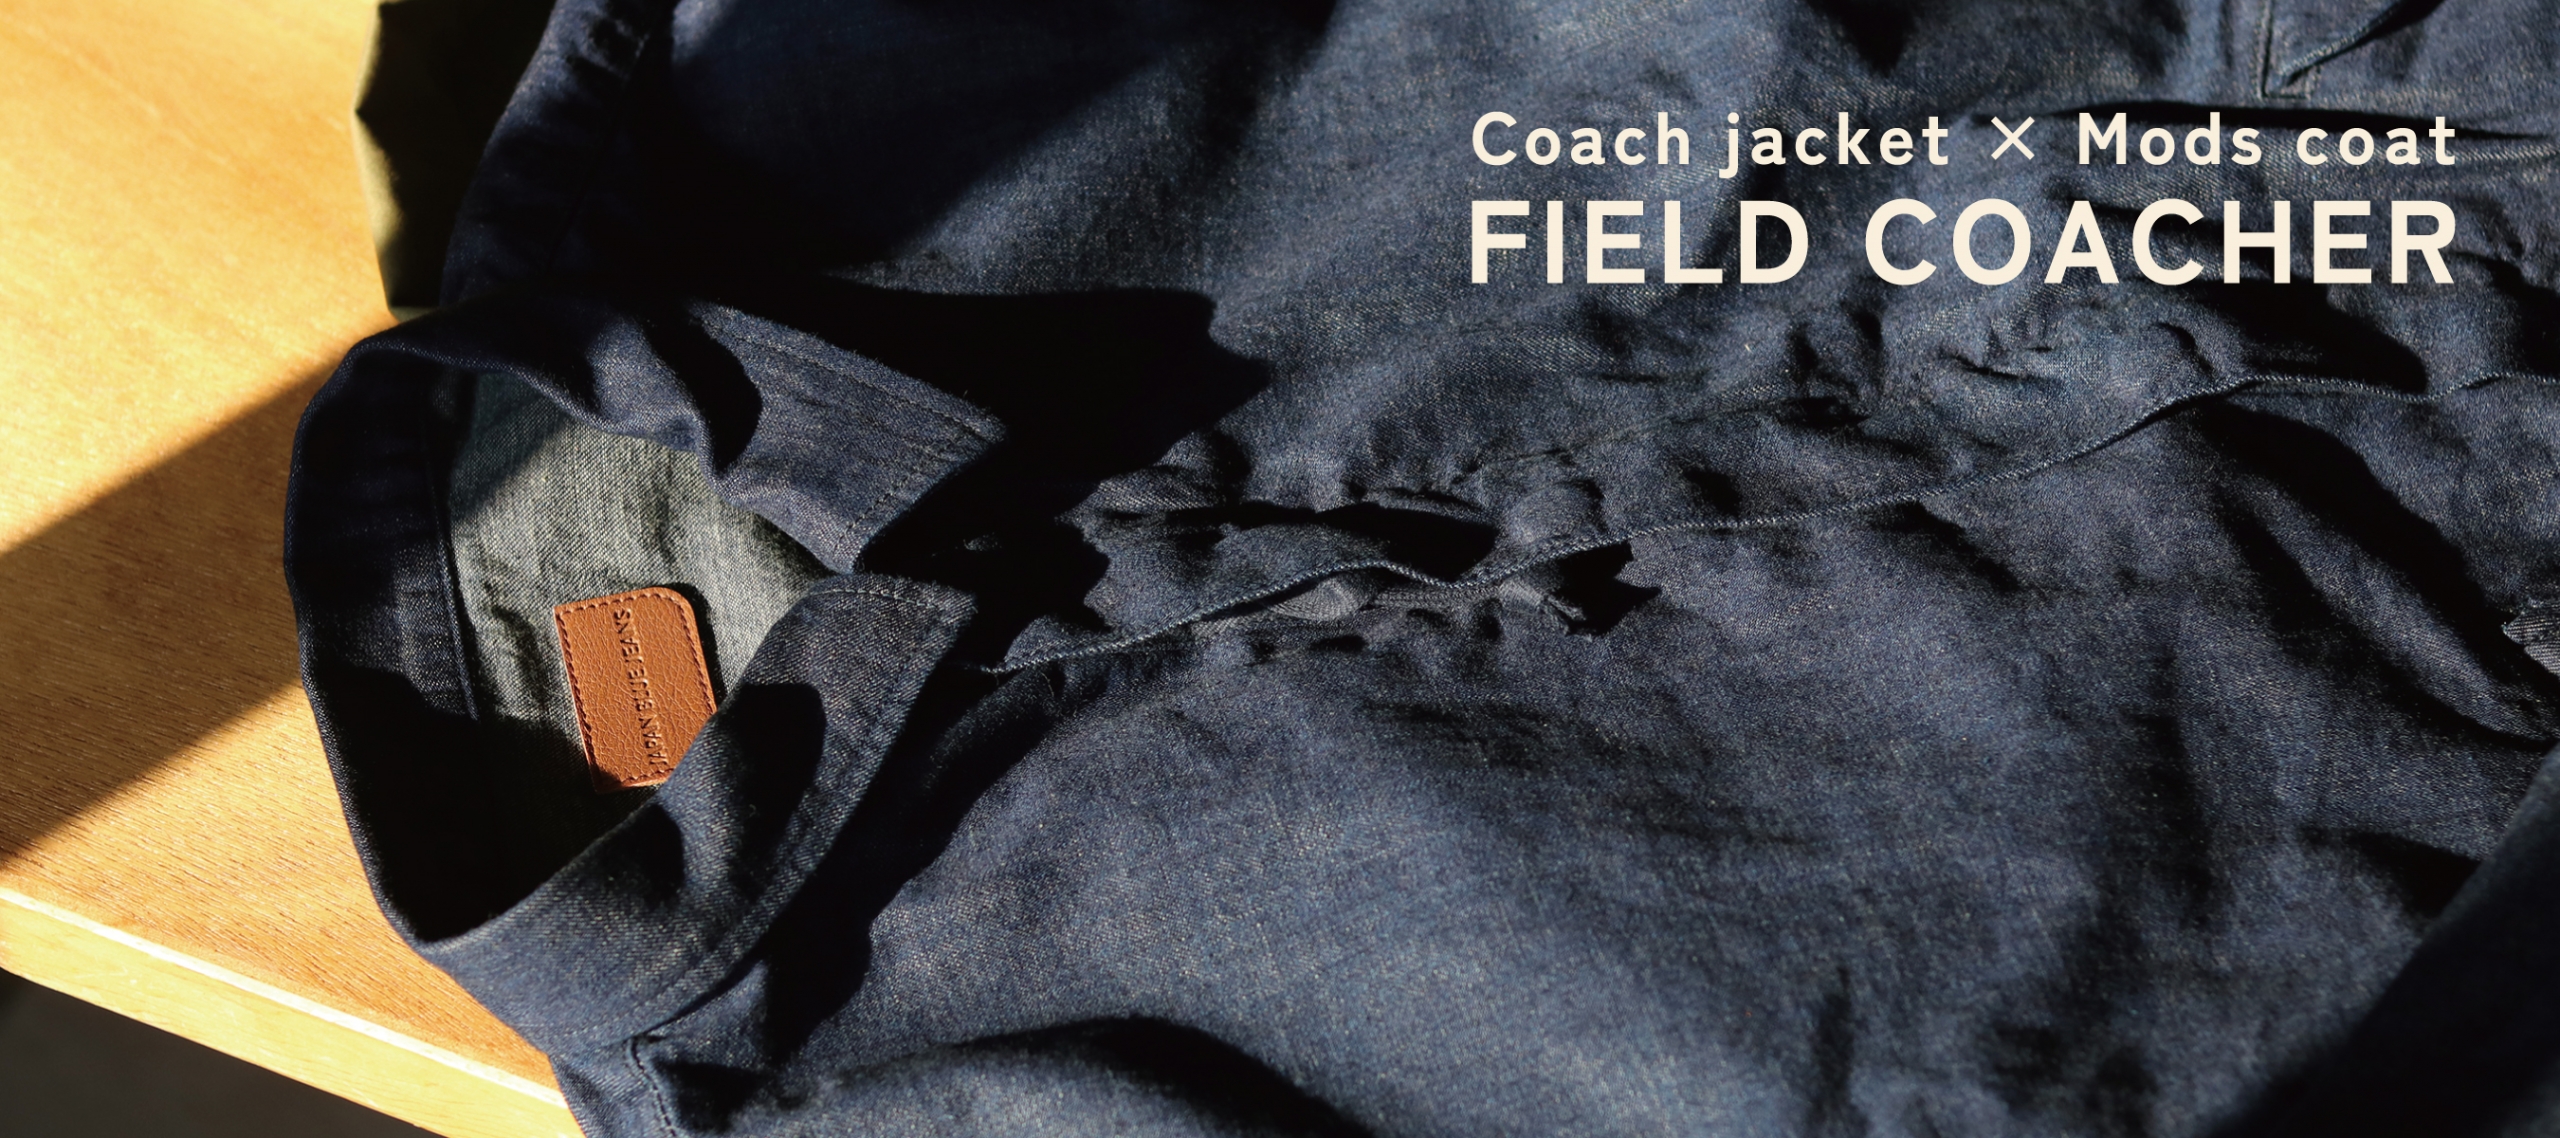 FIELD COACHER -Coach jacket × Mods coat-